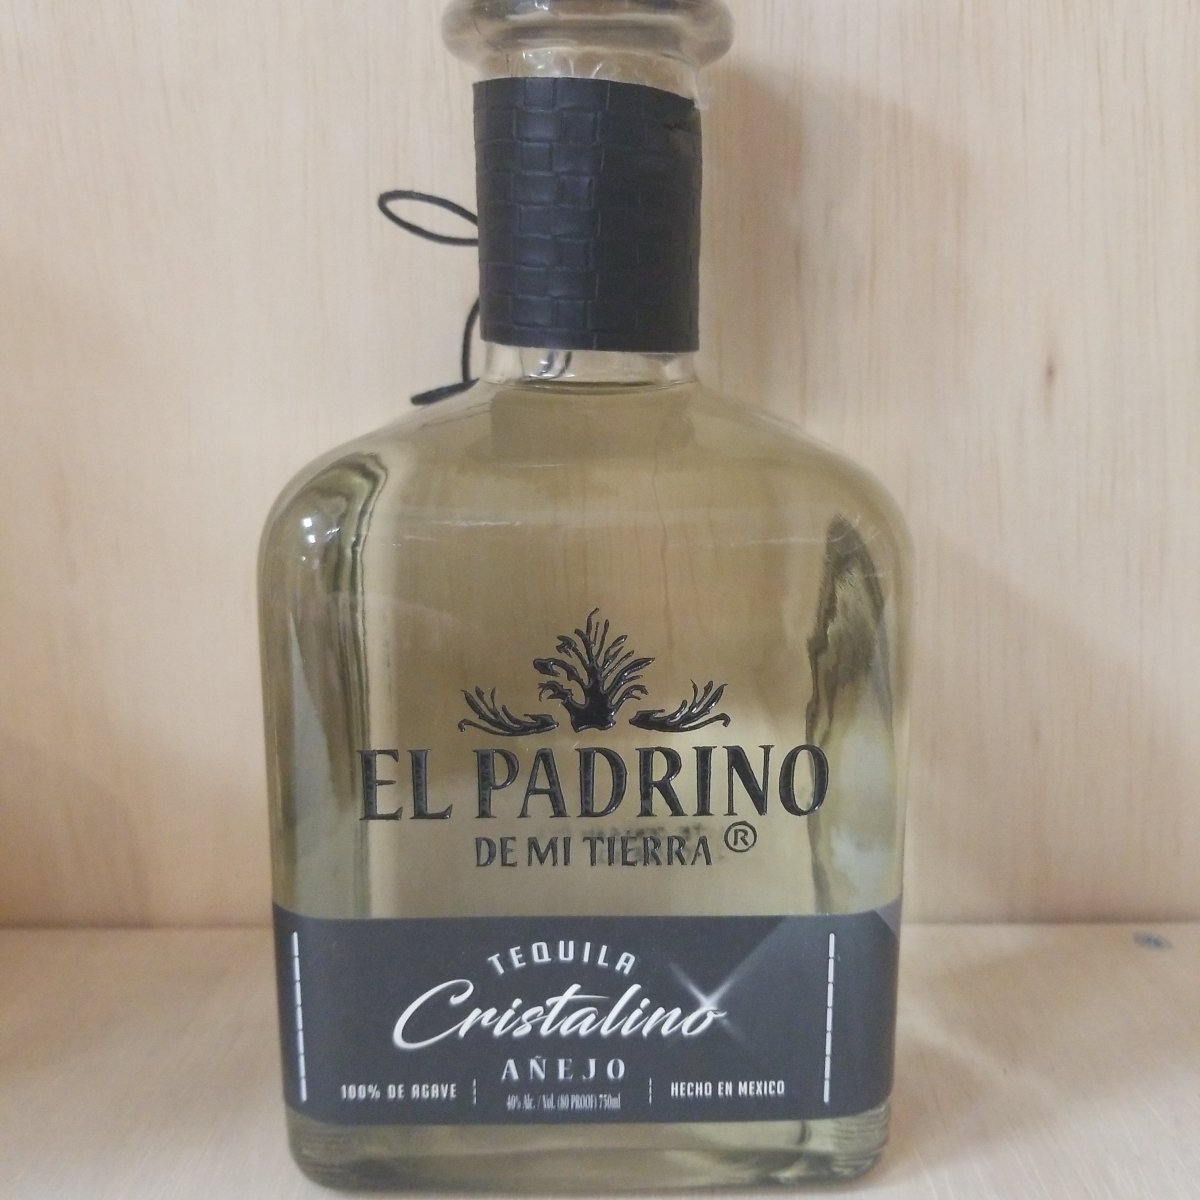 El Padrino Cristalino Anejo Tequila 750ml - Sip & Say